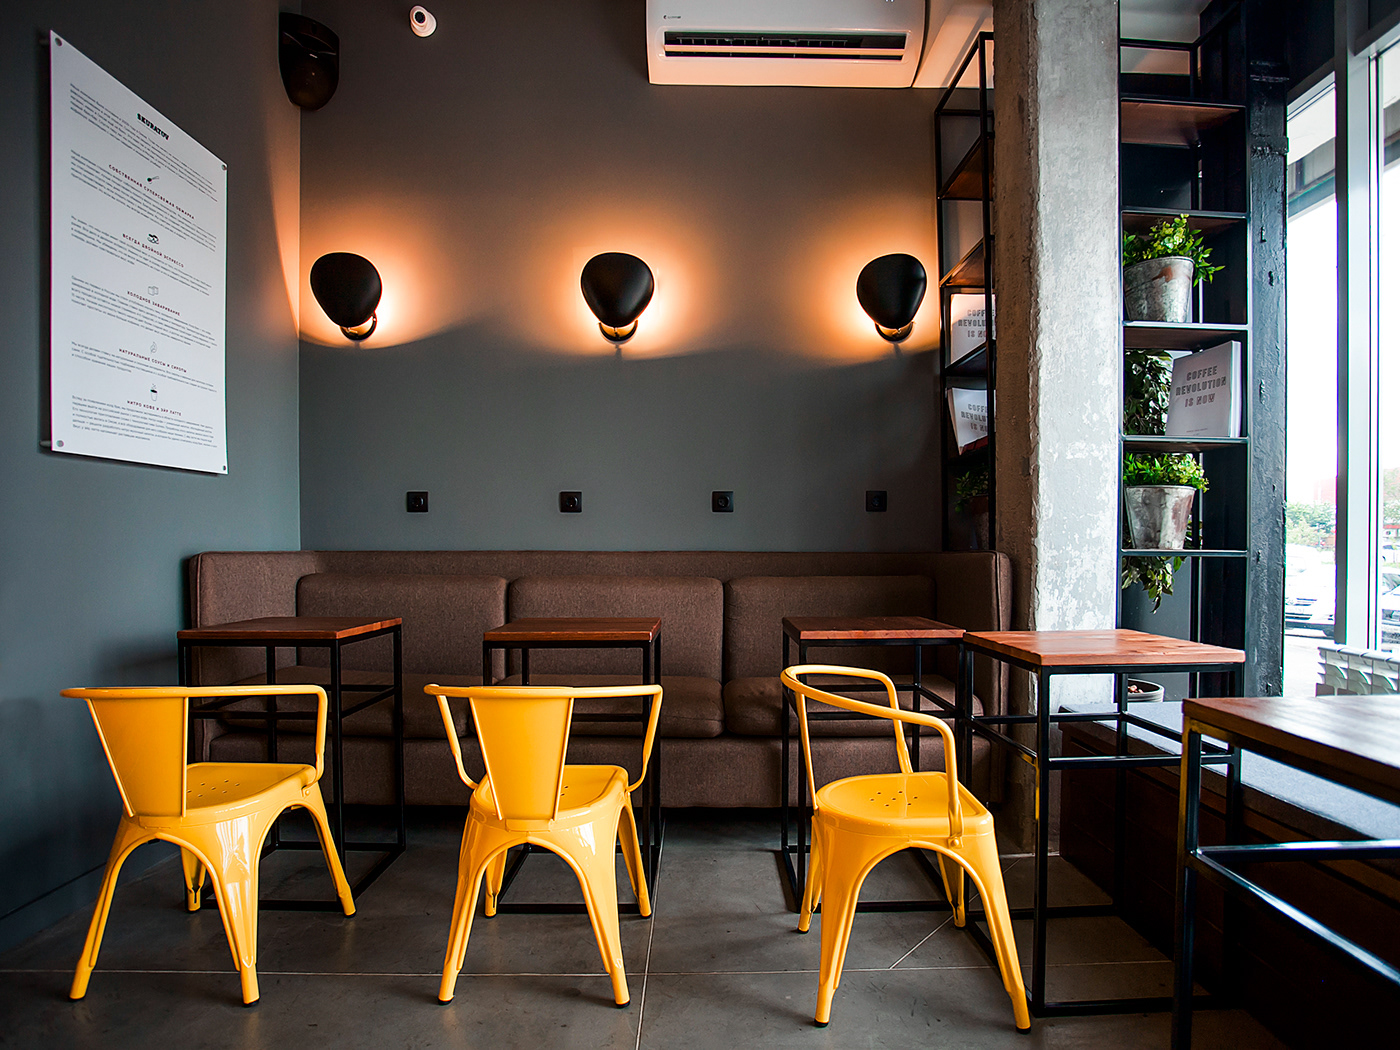 Coffee coffeeshop brewbar design Interior bar restaurant caffe designinterior кофейня